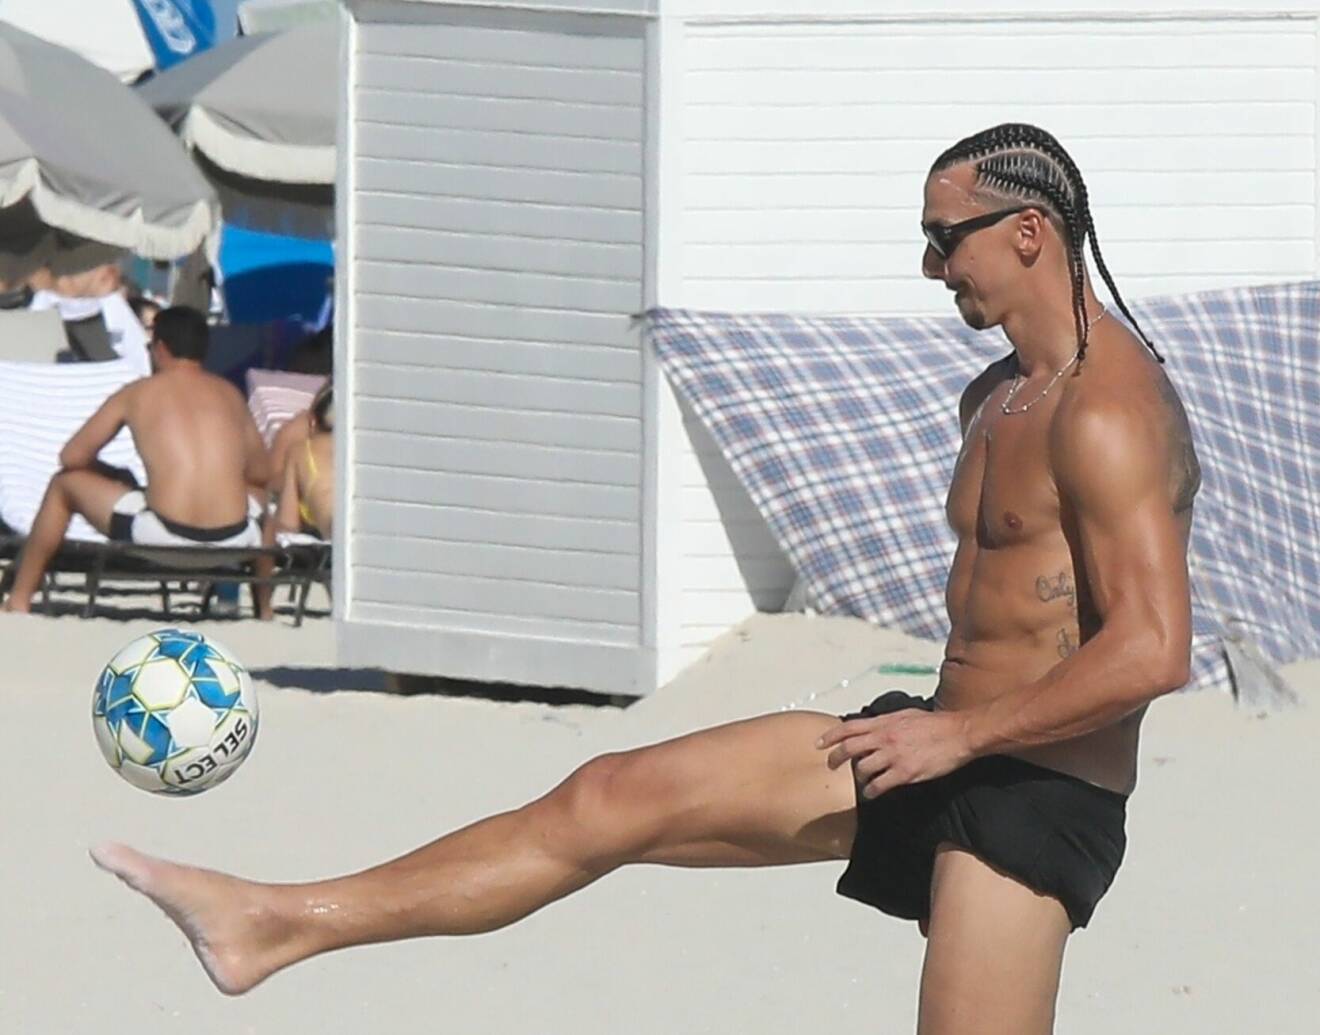 Zlatan trixar med en boll på stranden i Miami. Takterna sitter i minst sagt.